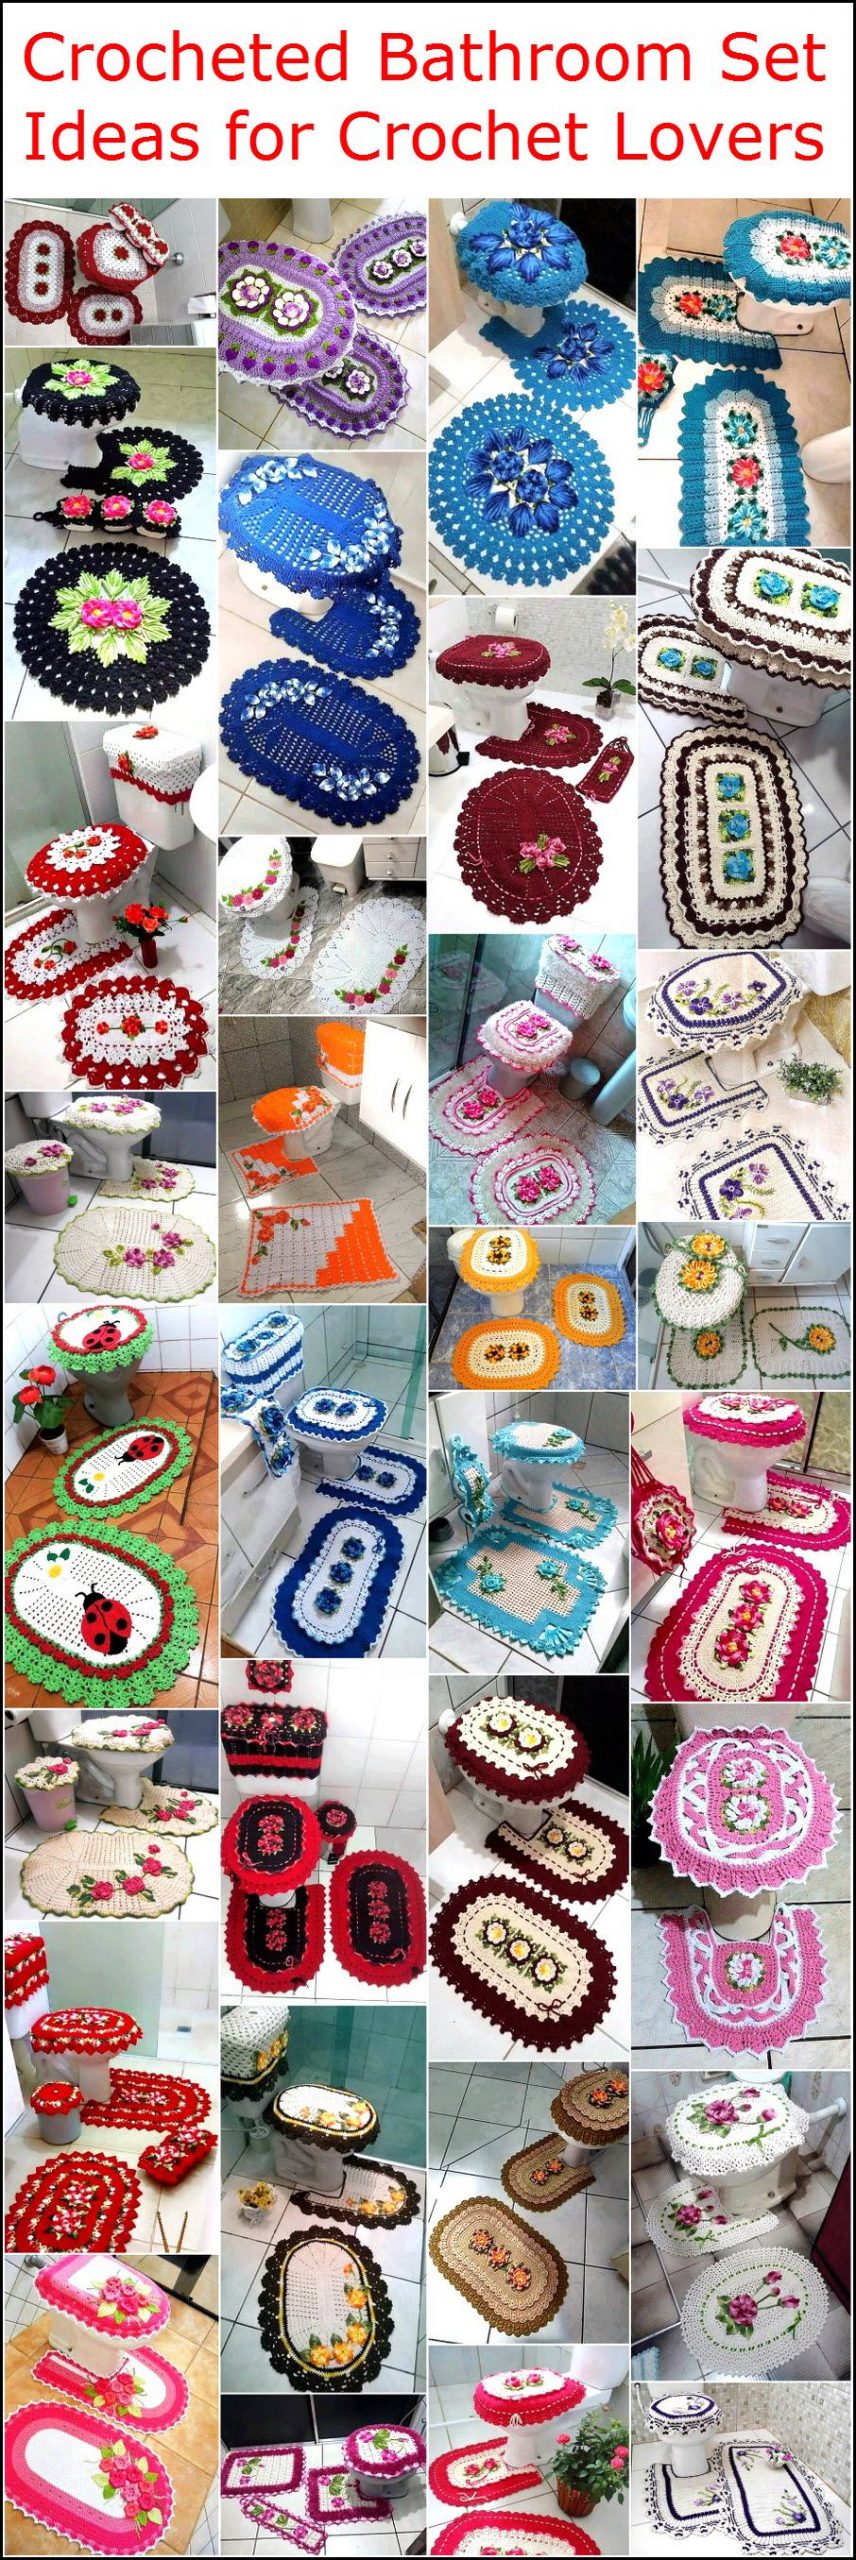 Crocheted Bathroom Set Ideas for Crochet Lovers